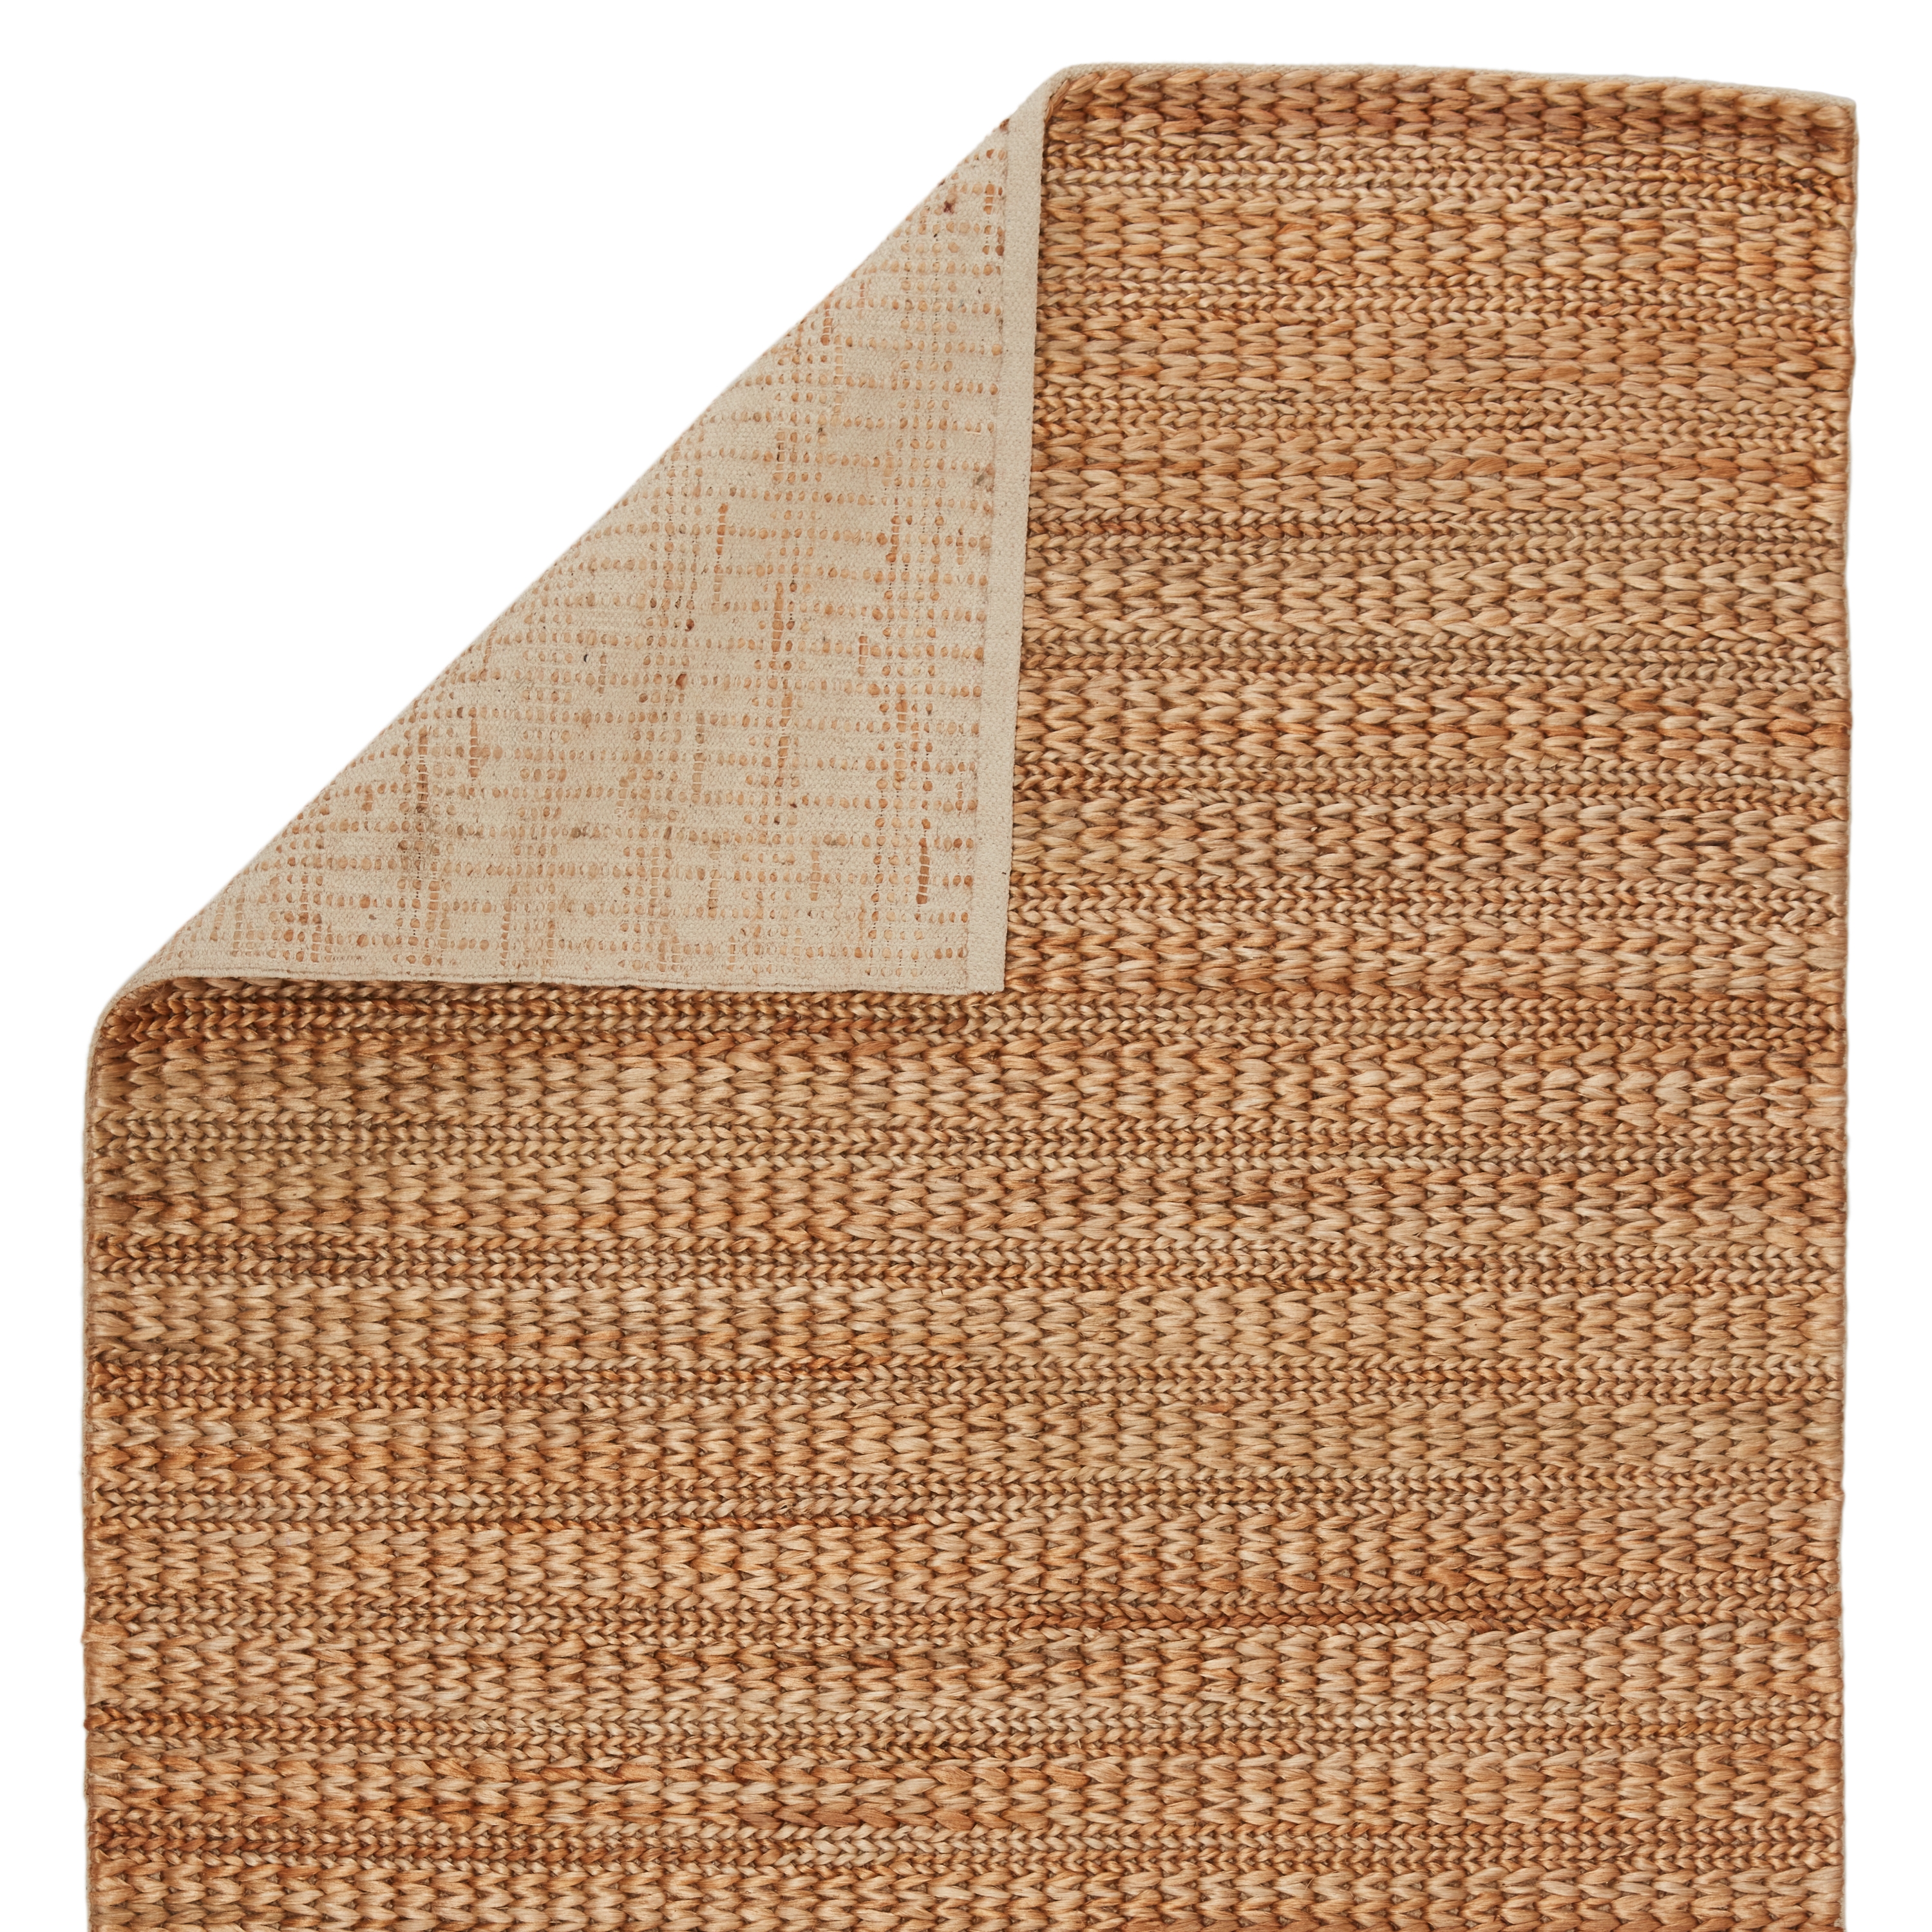 Poncy Natural Solid Tan Area Rug (8'X10') - Image 2